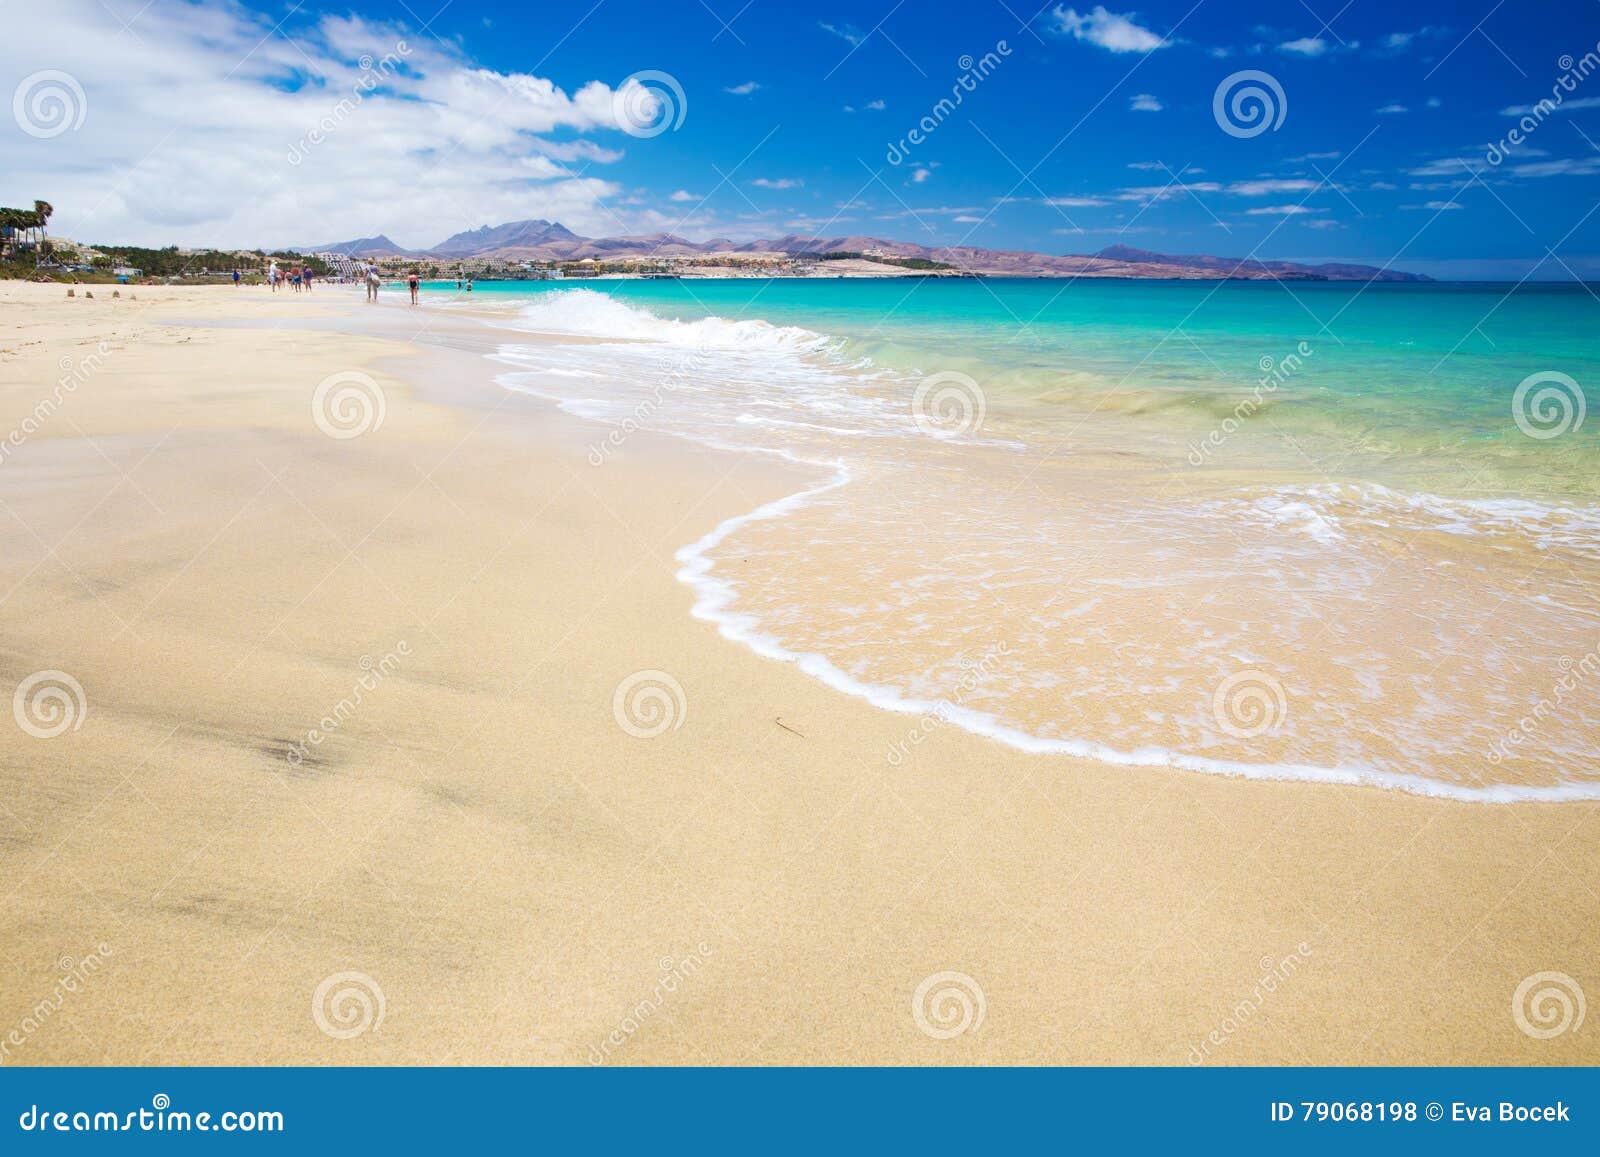 costa calma beach on jandia peninsula, fuerteventura, canary islands